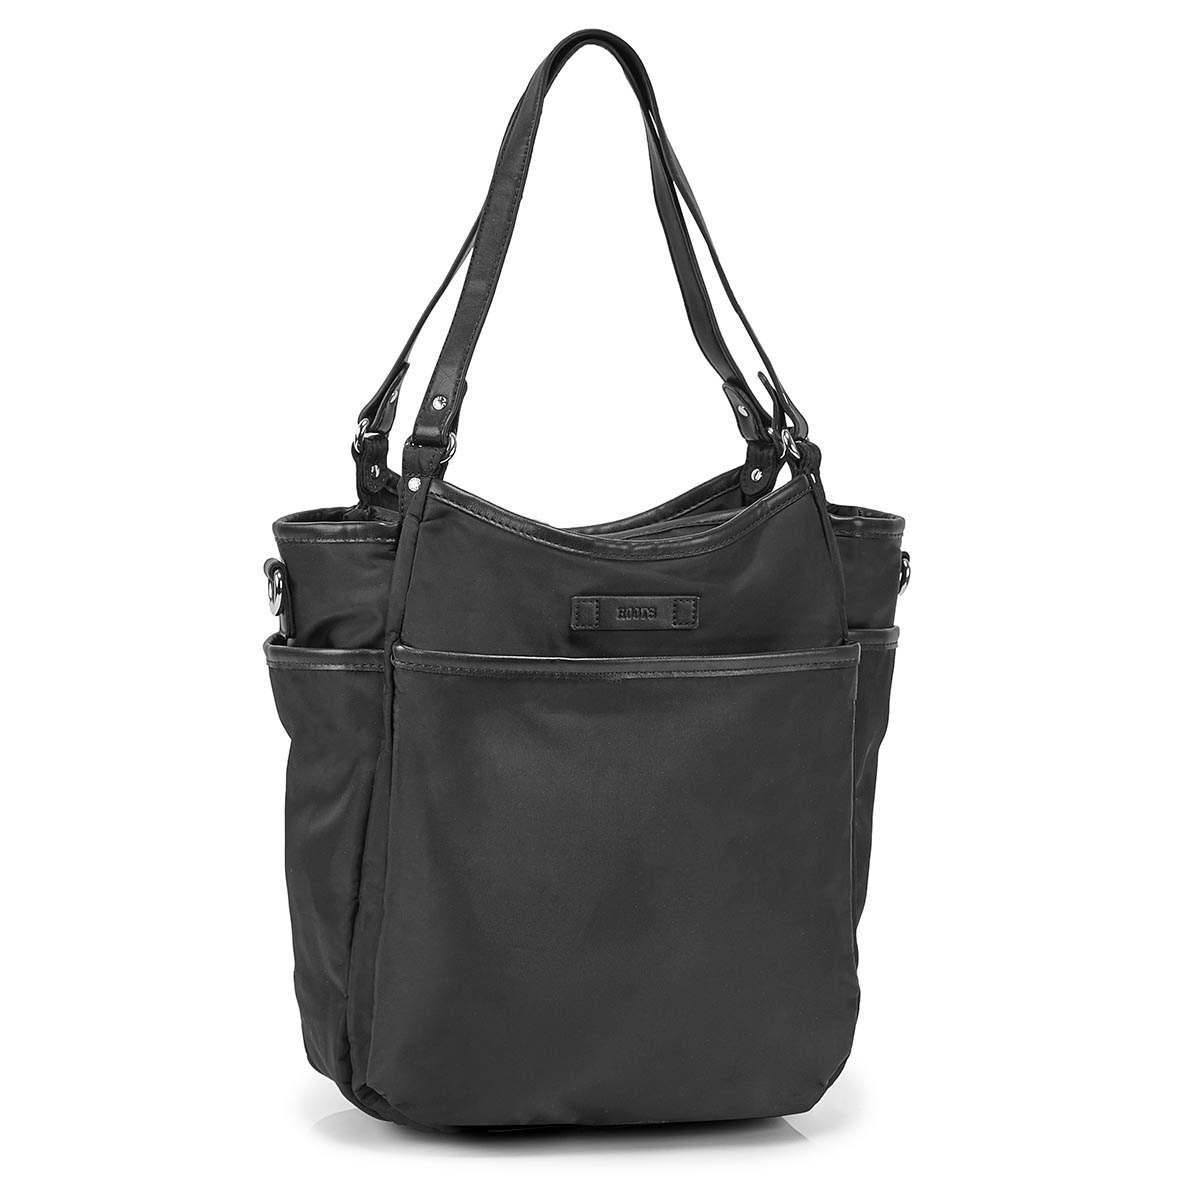 Roots Women's R5802 black muli pocket satchel | SoftMoc.com